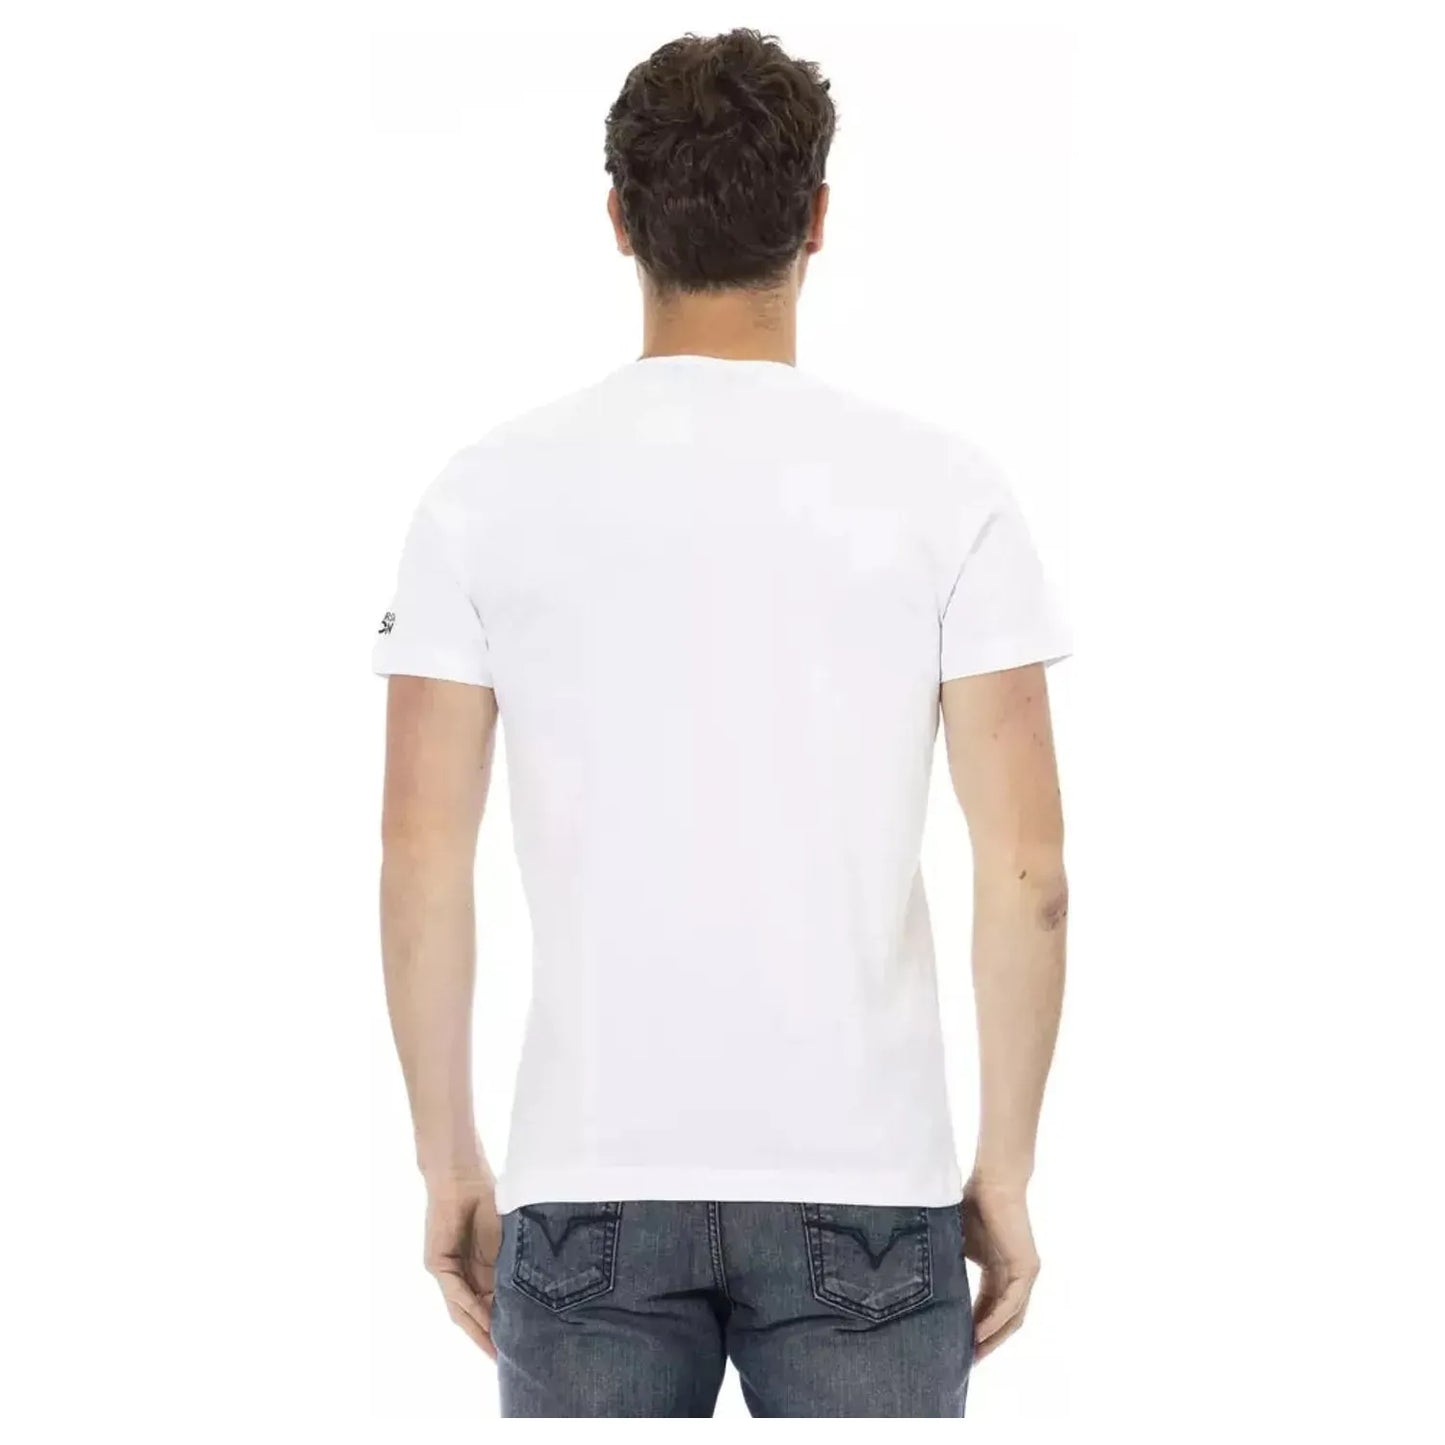 Trussardi Action Sleek Summer White Tee with Graphic Print white-cotton-t-shirt-118